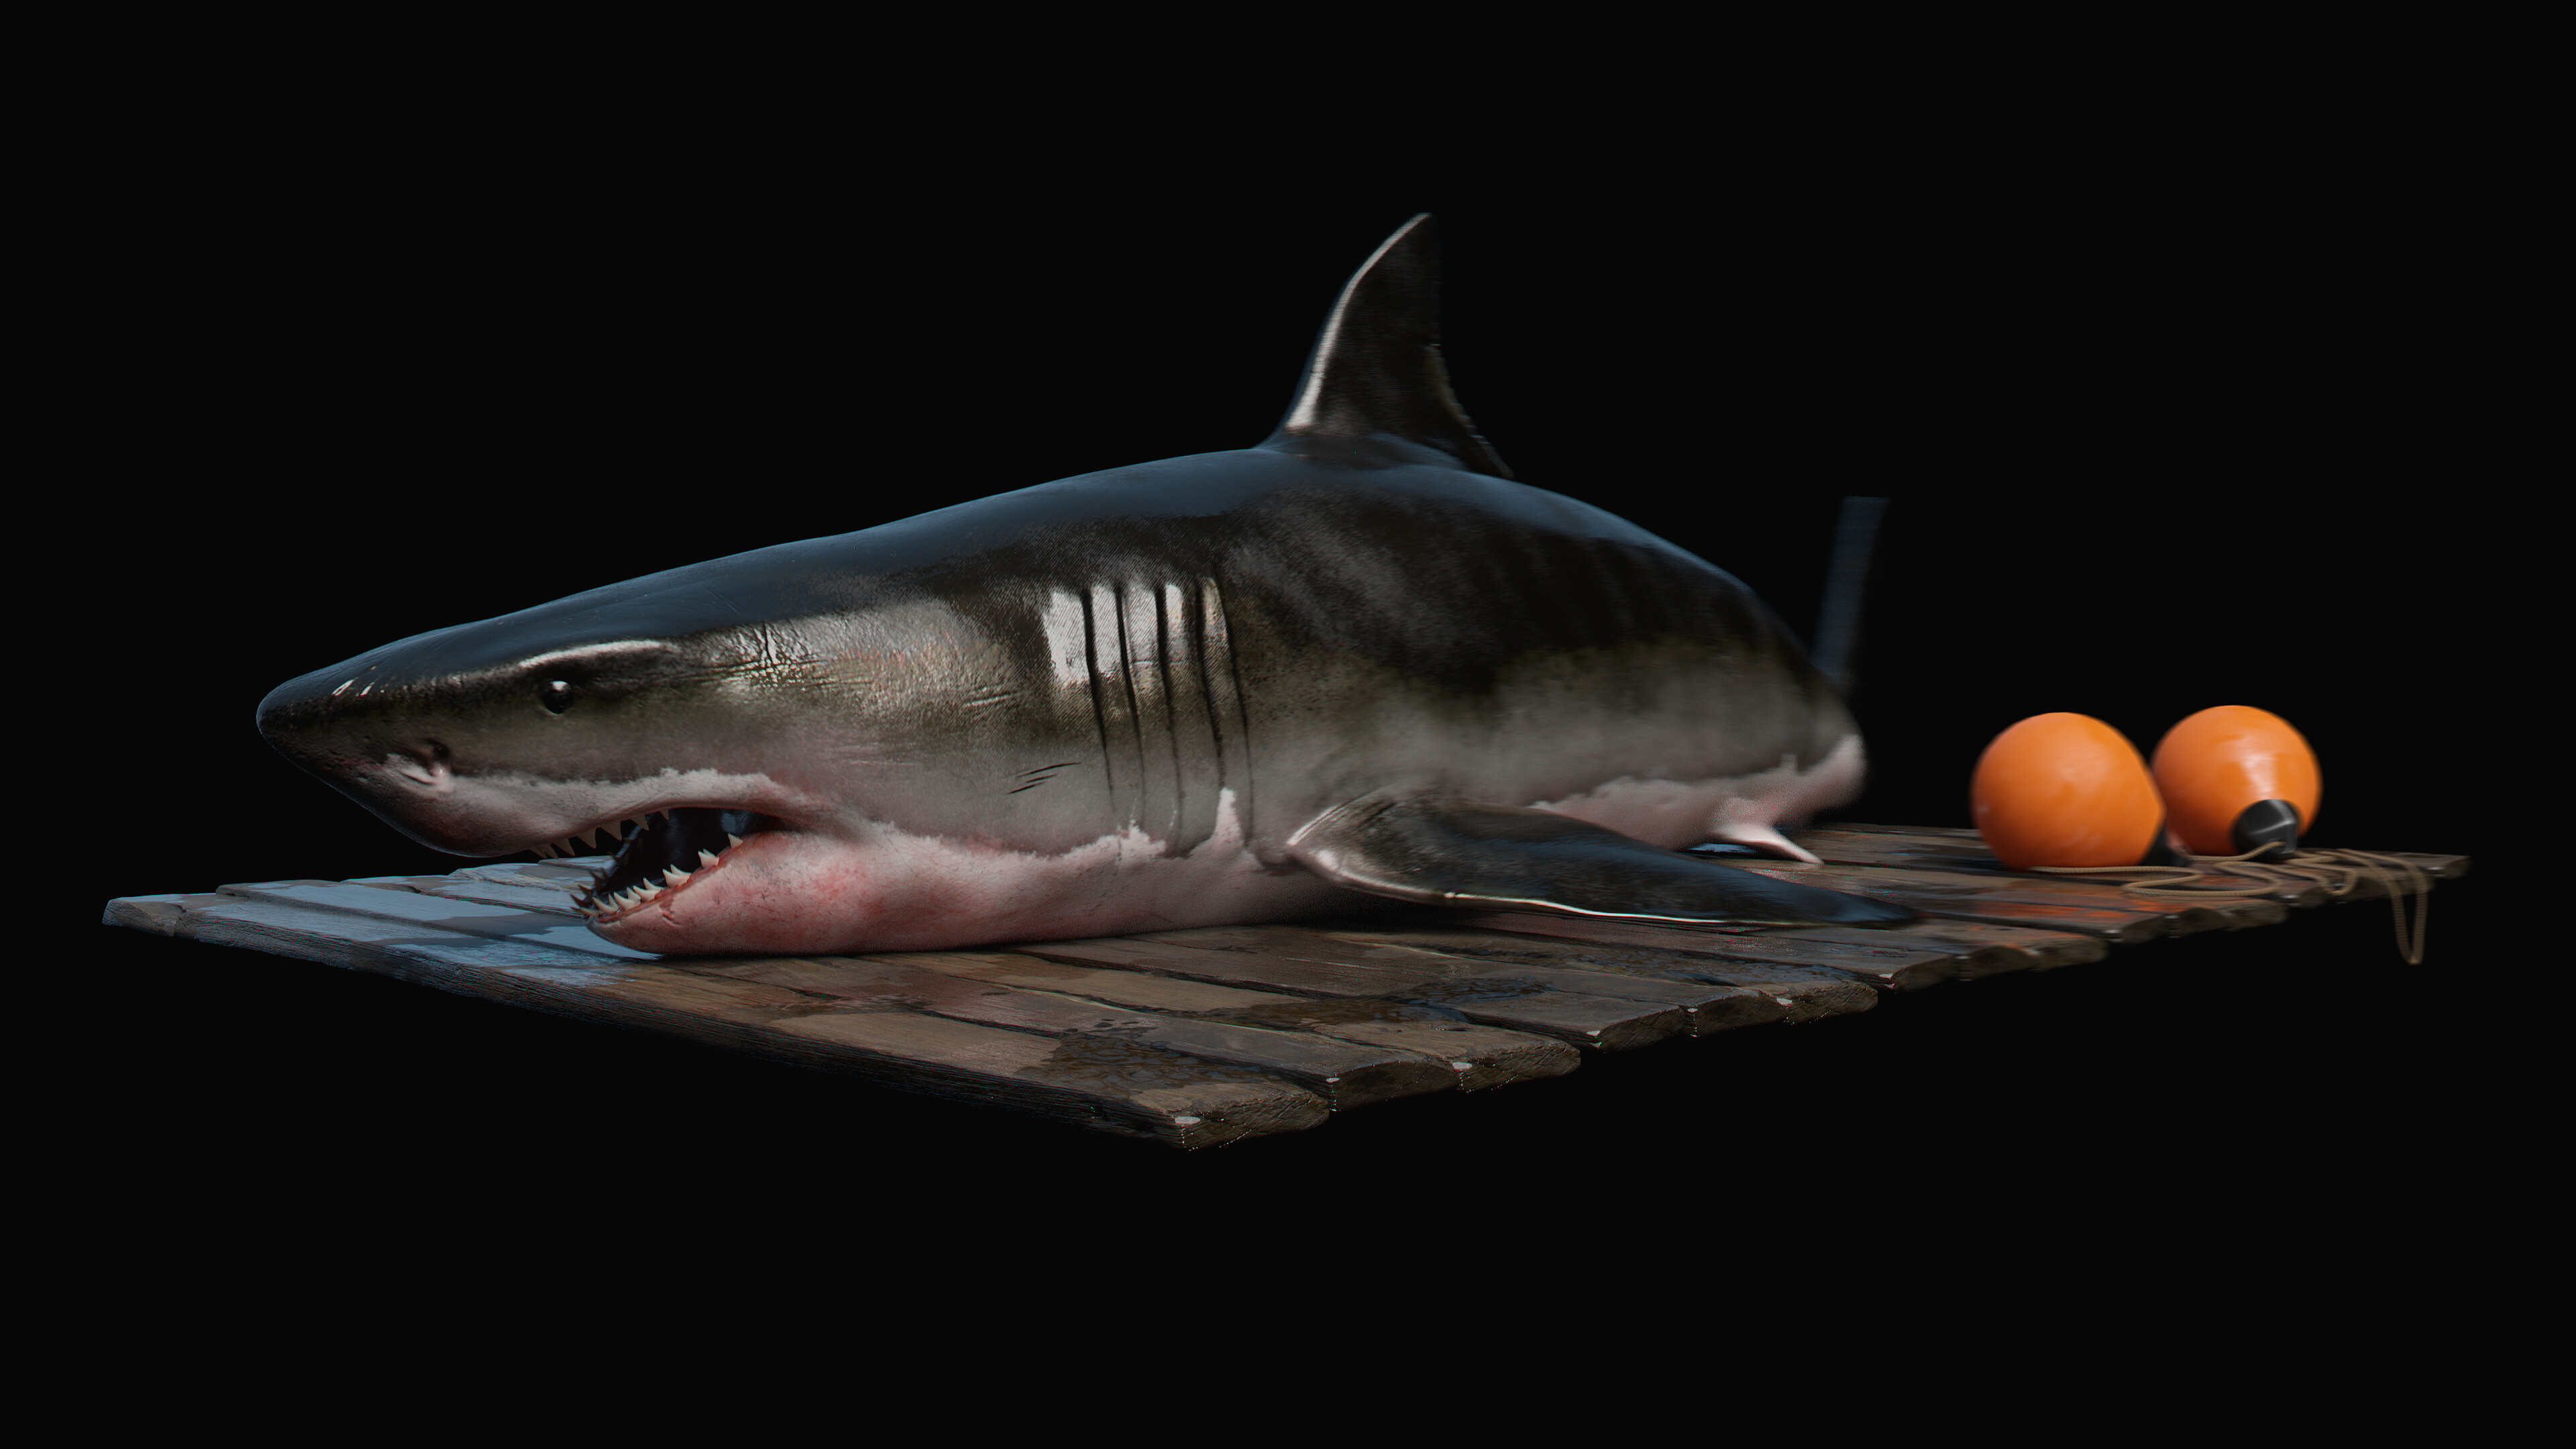 Shark - Finished Projects - Blender Artists Community